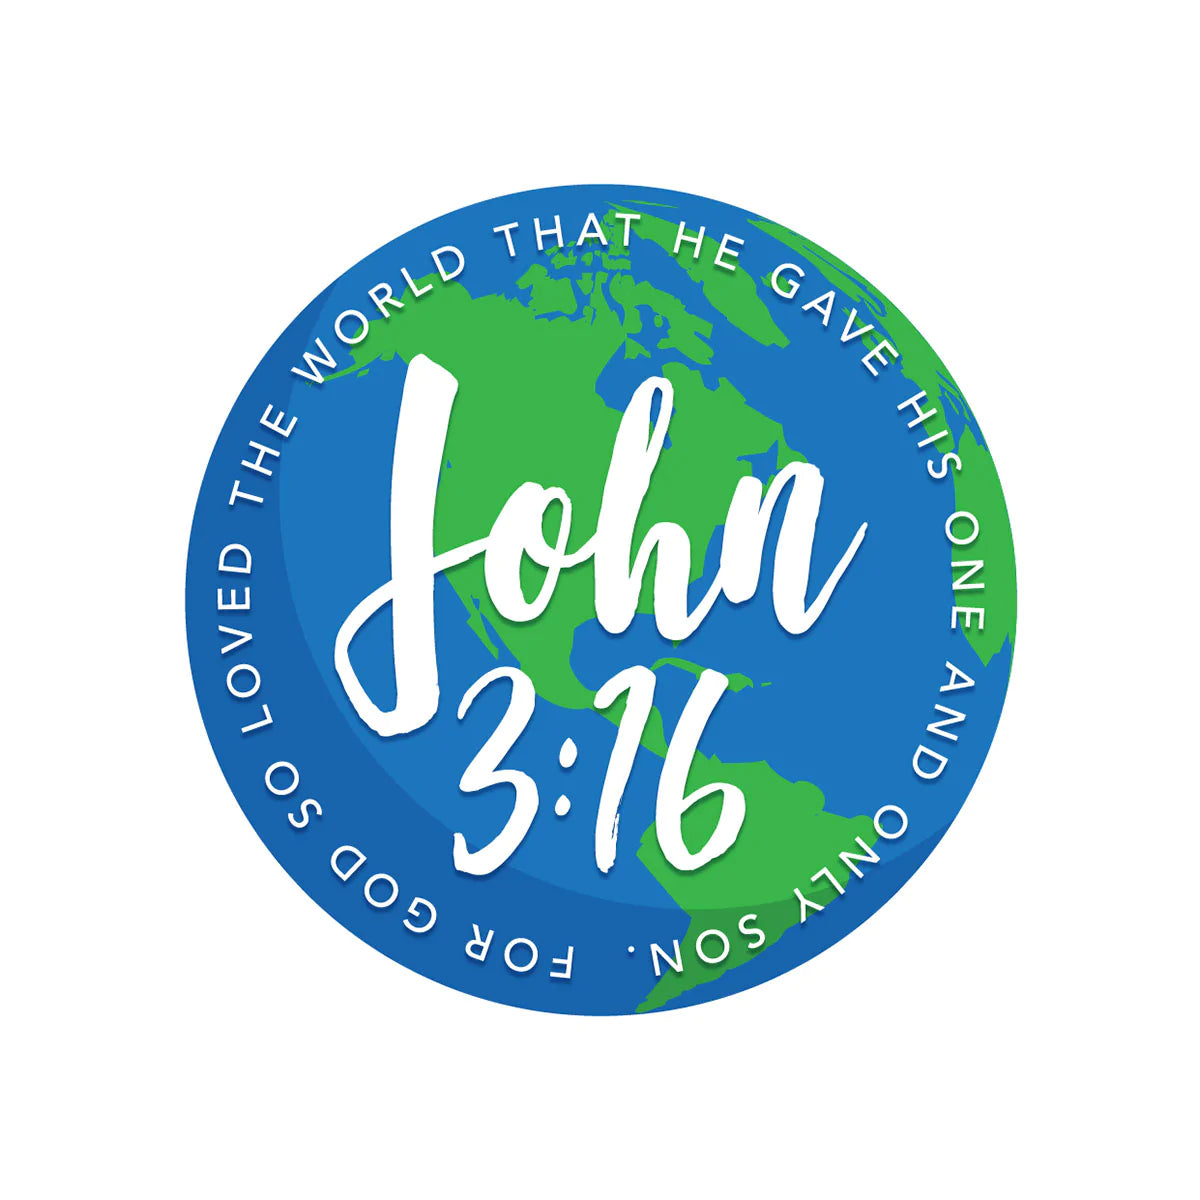 John 3:16 Vinyl Sticker